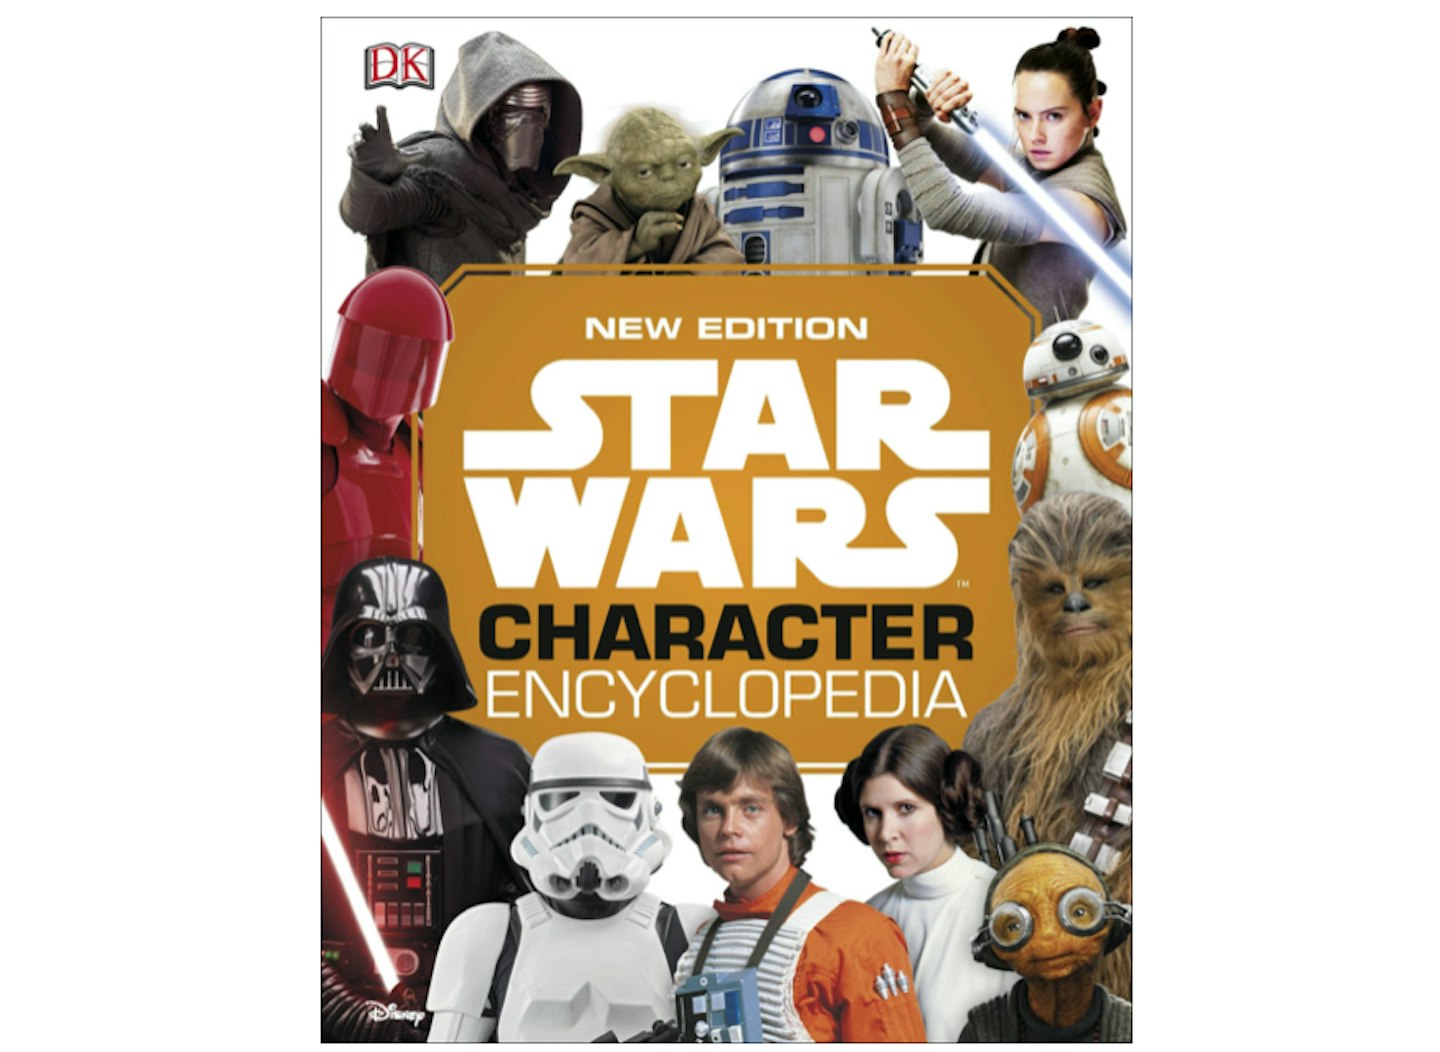 Star Wars Character Encyclopedia – New Edition